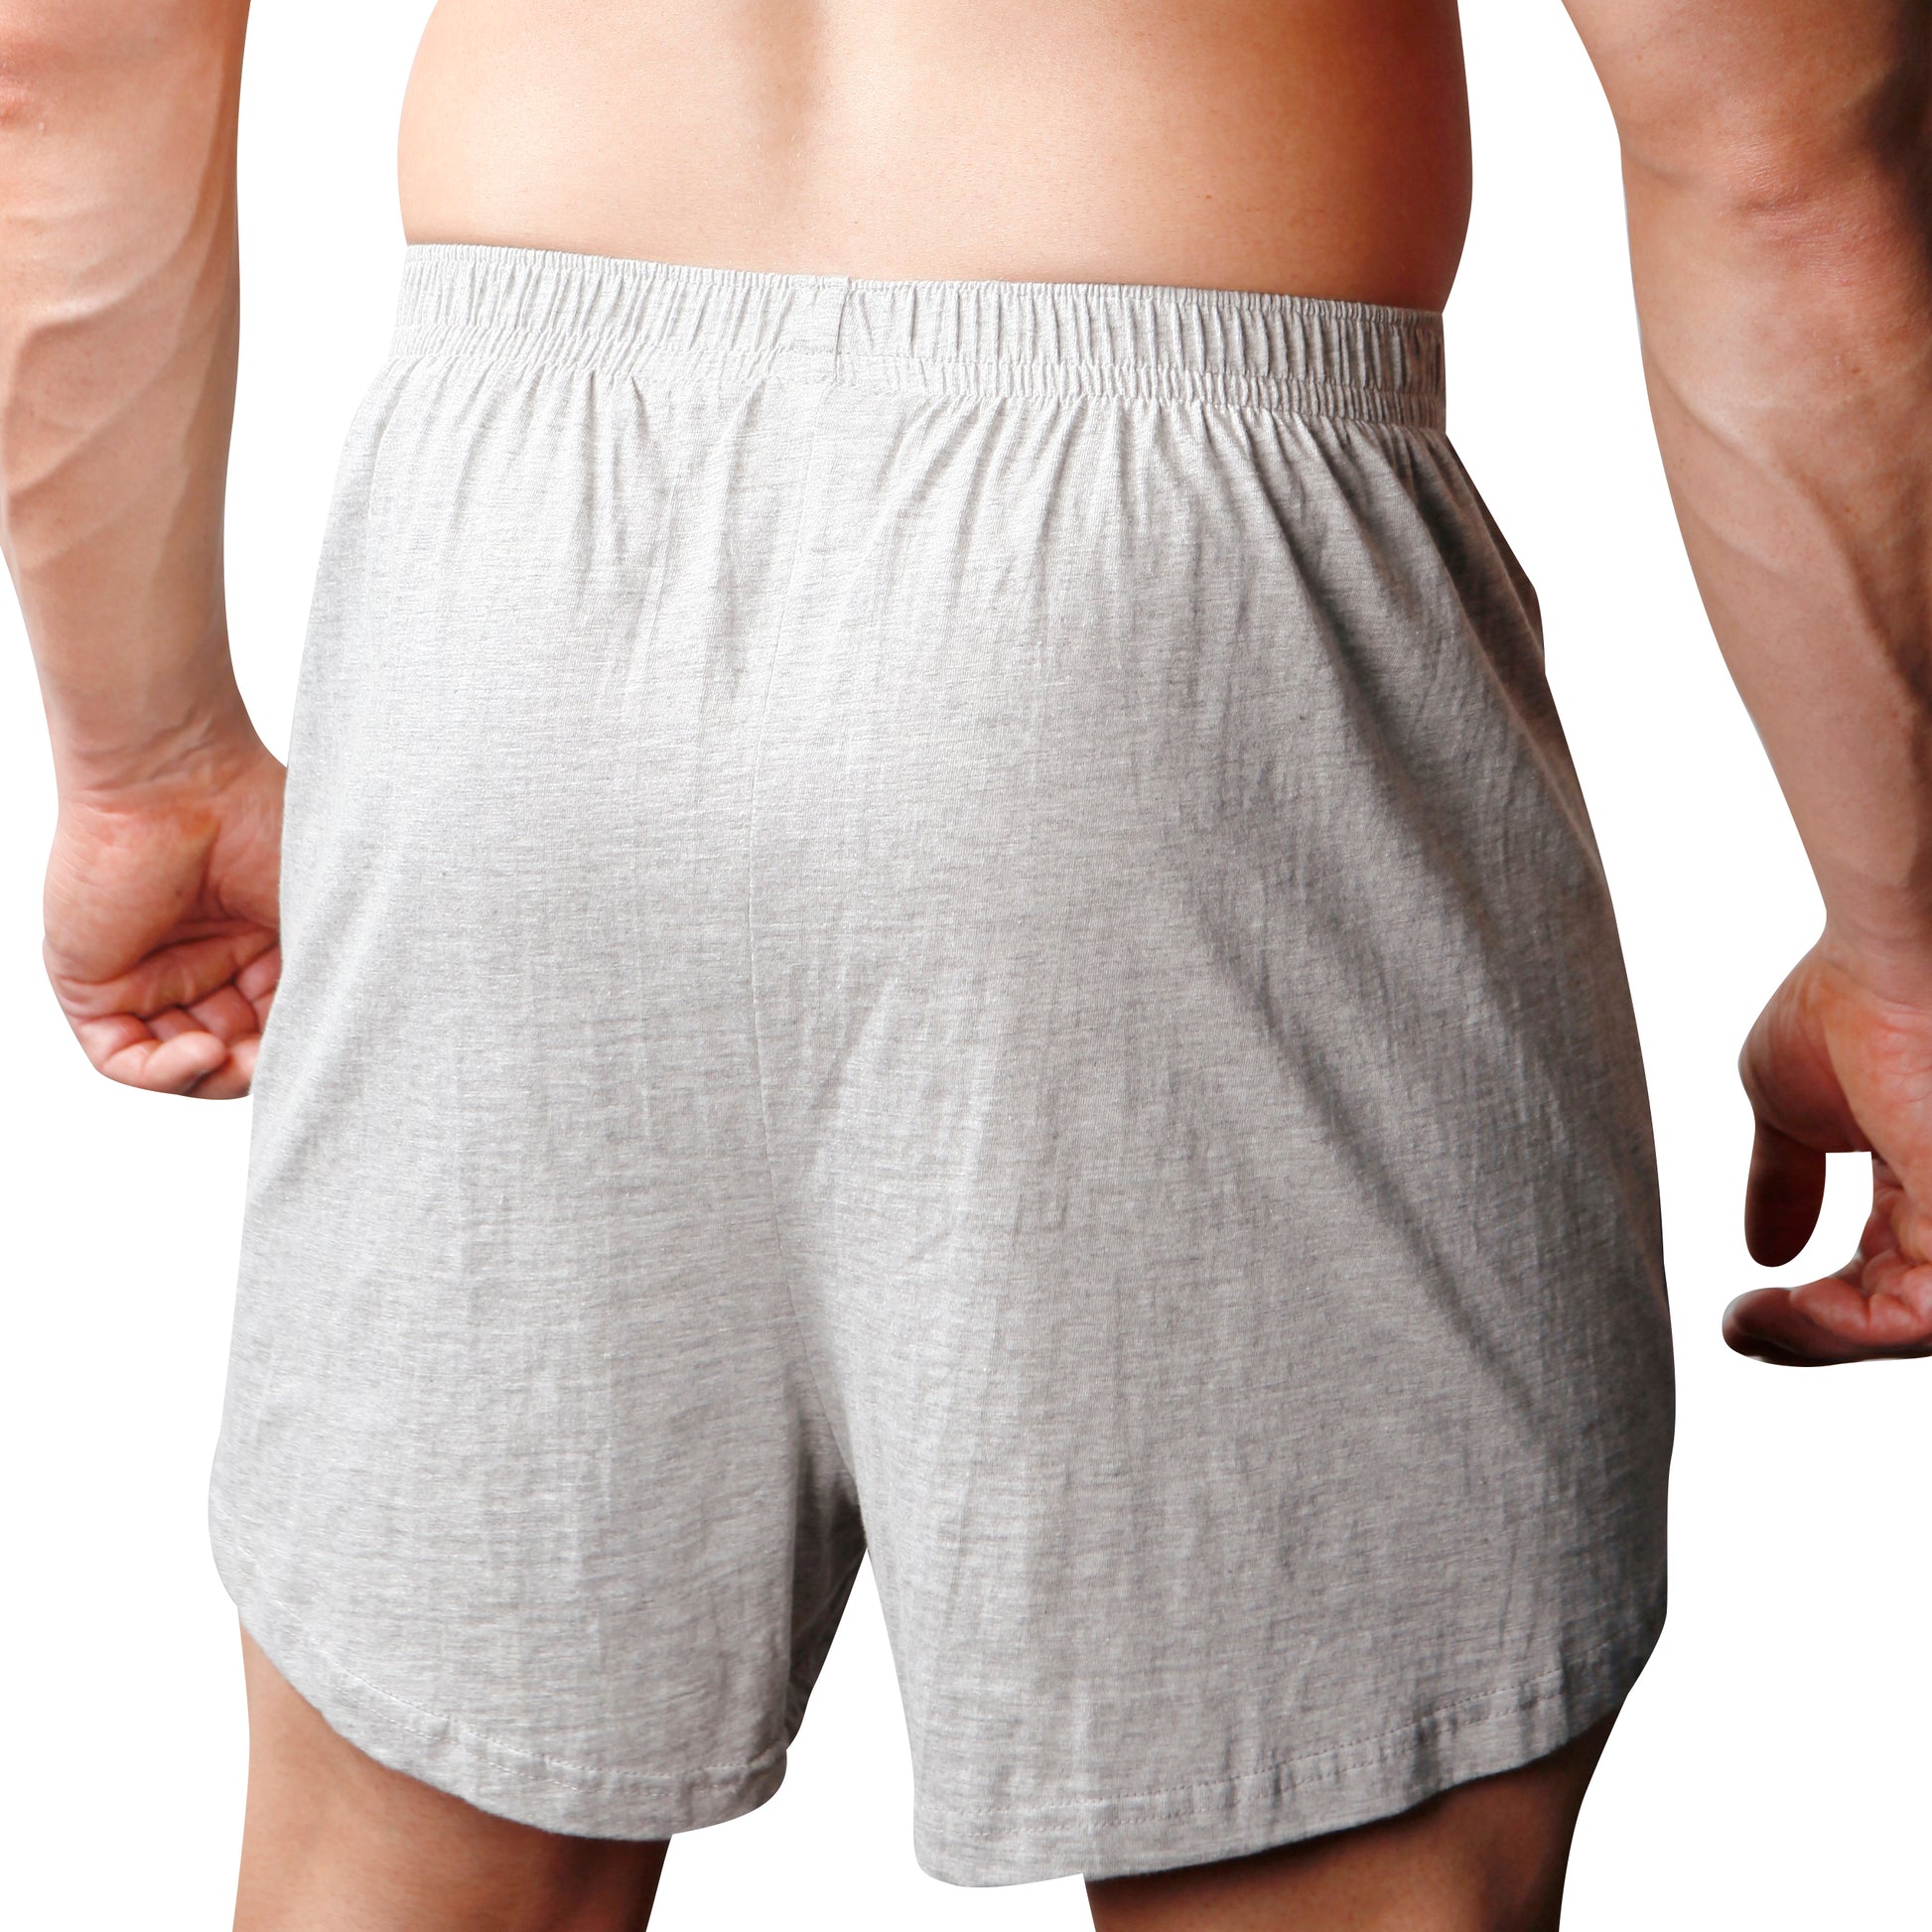 Players Underwear Mid-Length Brief Singles 100% Cotton 2X, 3X, 4X